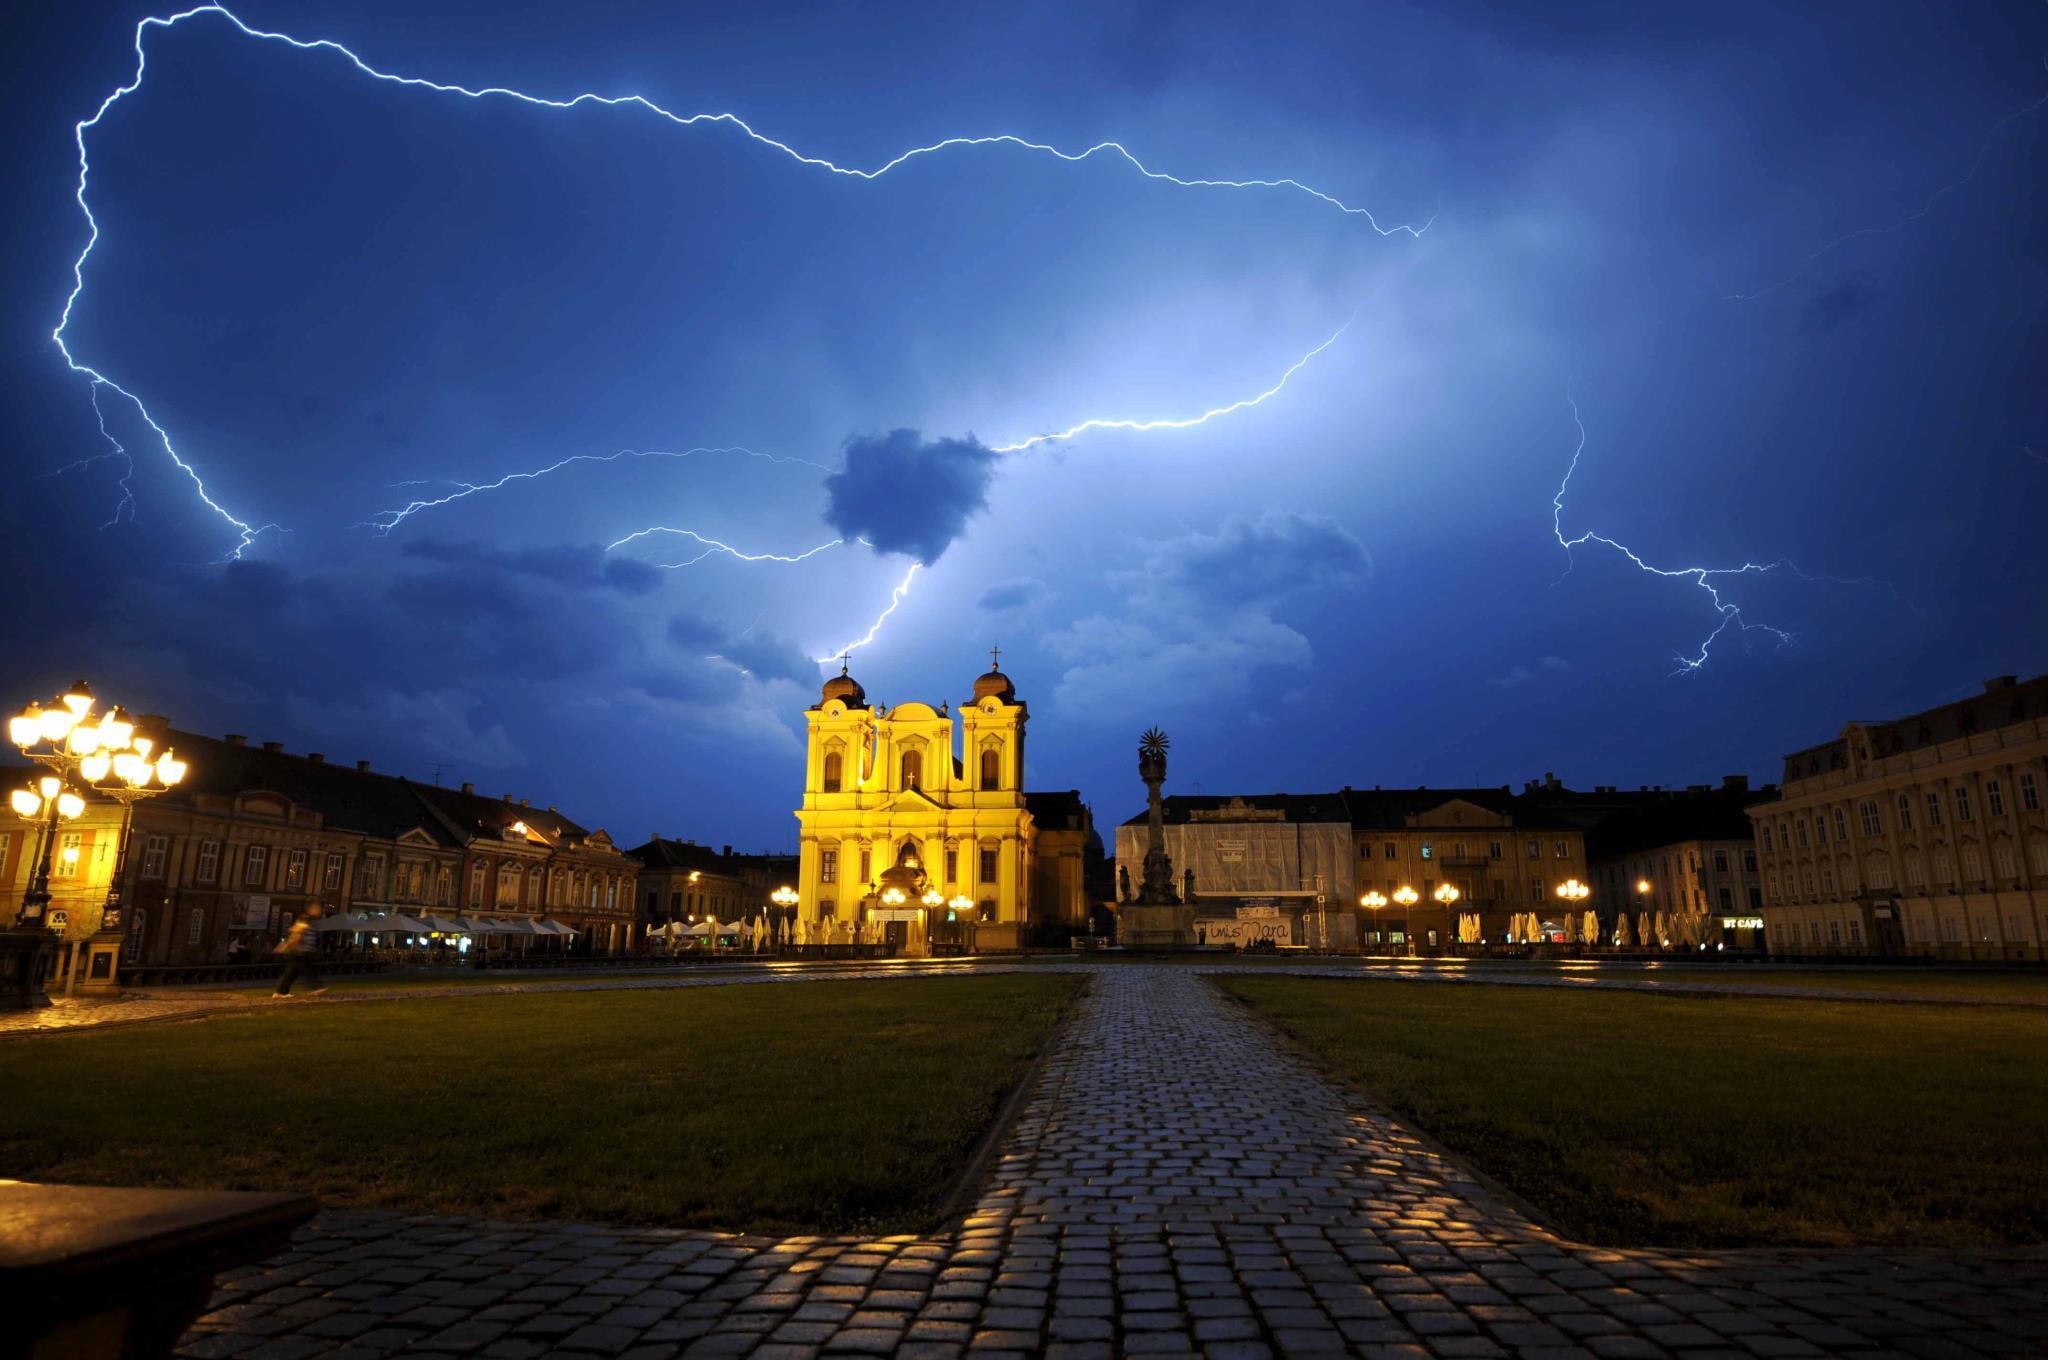 Union Square / Timisoara, beautiful, architecture, lightning